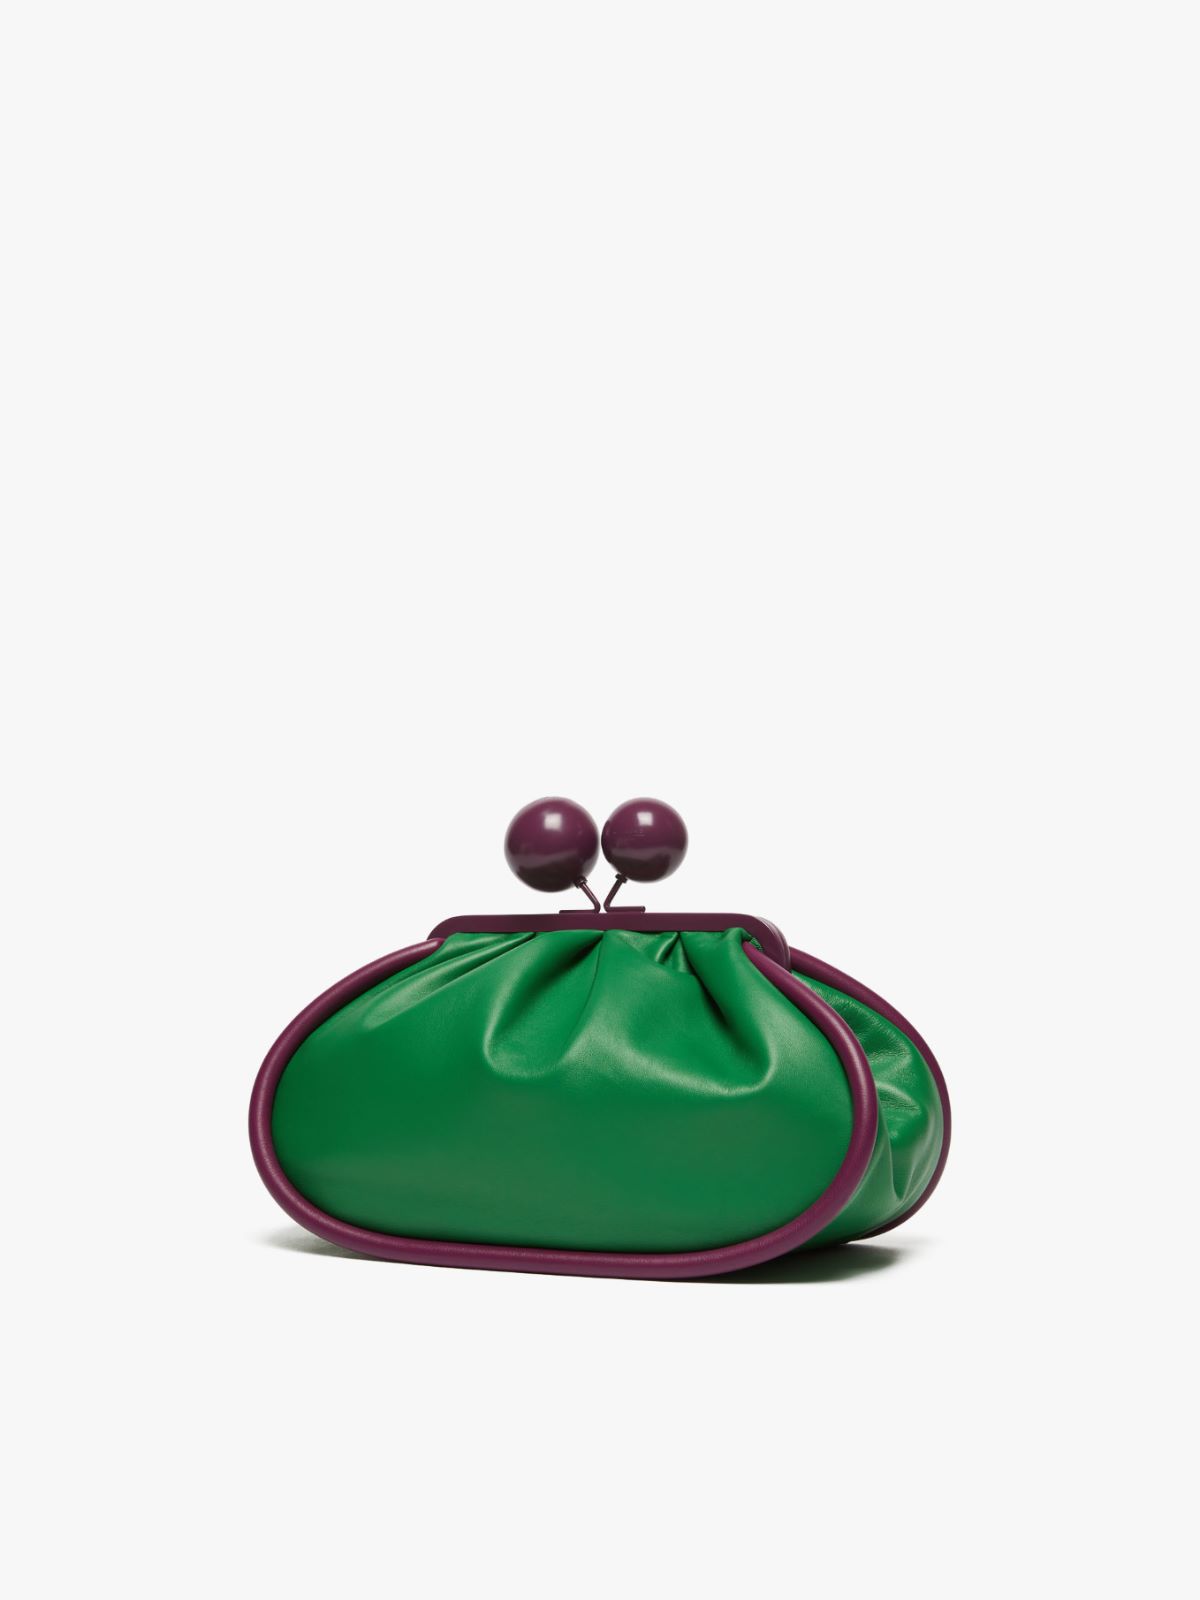 Medium Pasticcino Bag in nappa leather - GREEN - Weekend Max Mara - 2